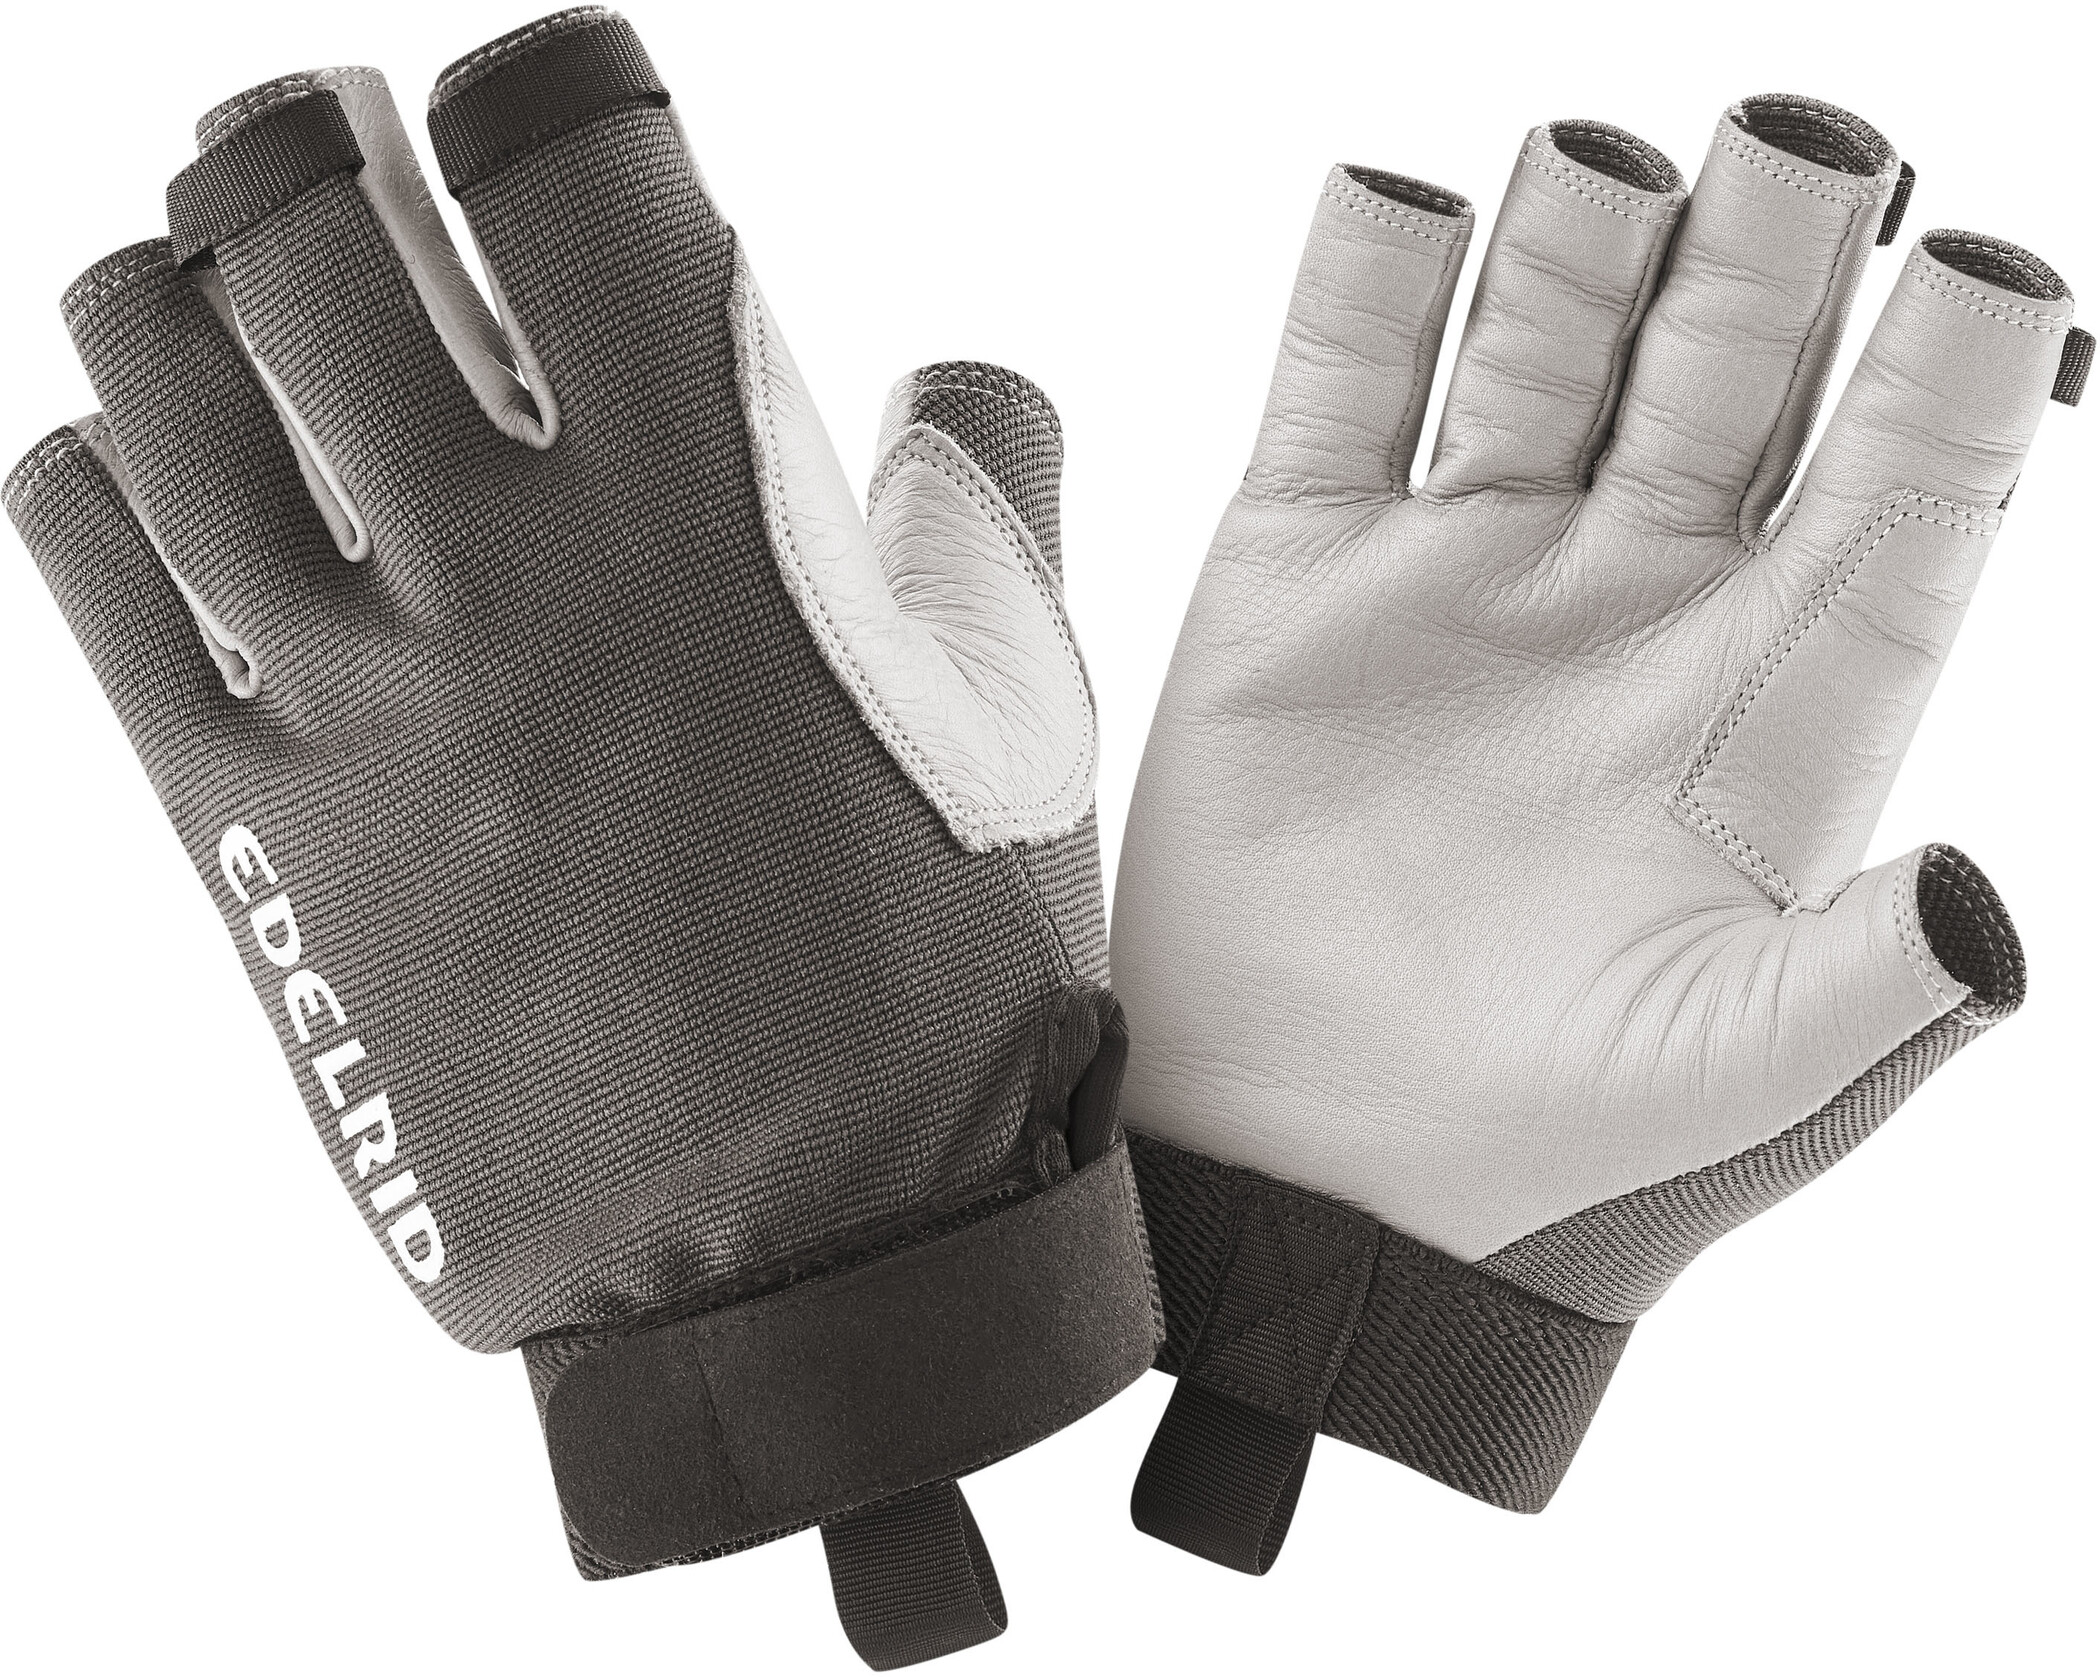 Schal Handschuhe Multifunktional Accessoires Handschuhe fingerlose Handschuhe 